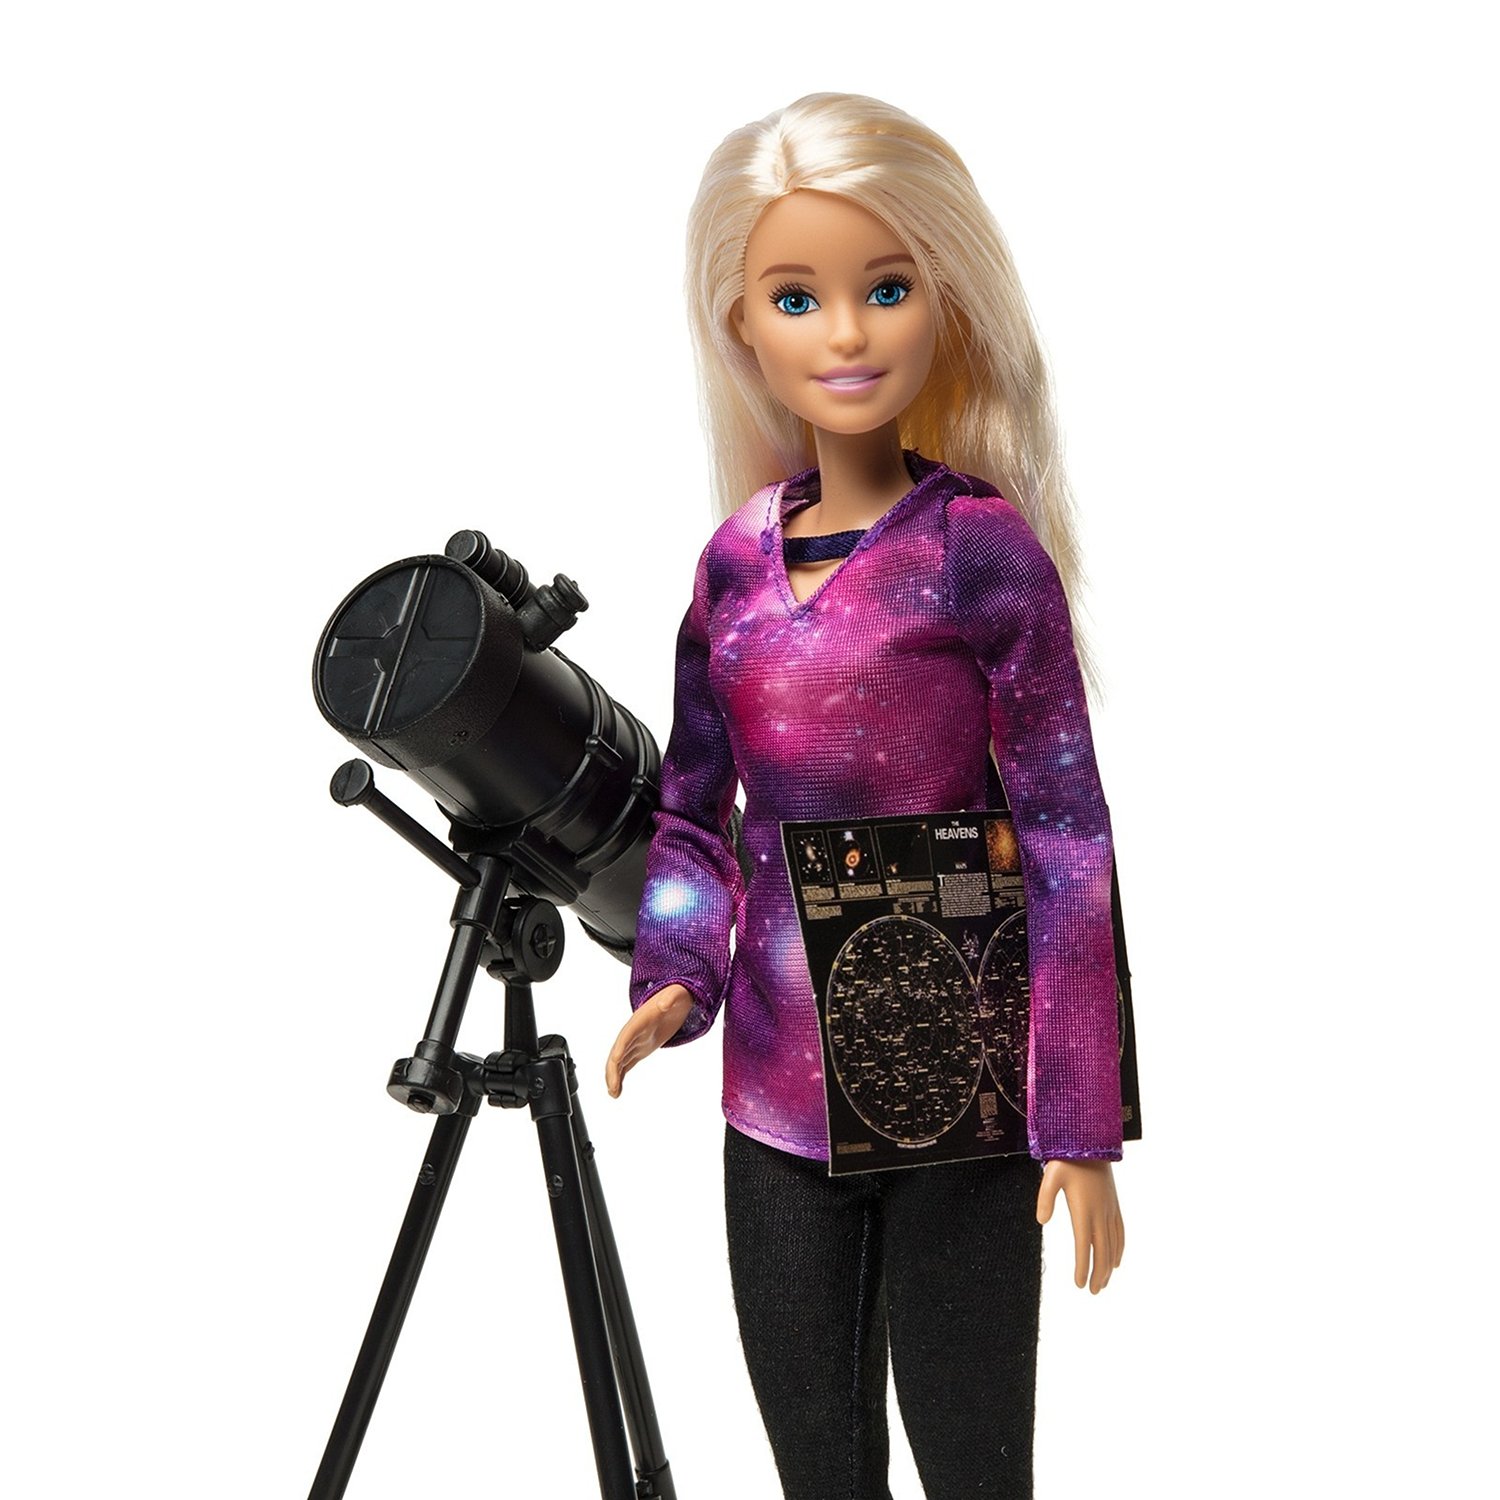 Кукла Barbie GDM47 Кем быть National Geographic Астрофизик